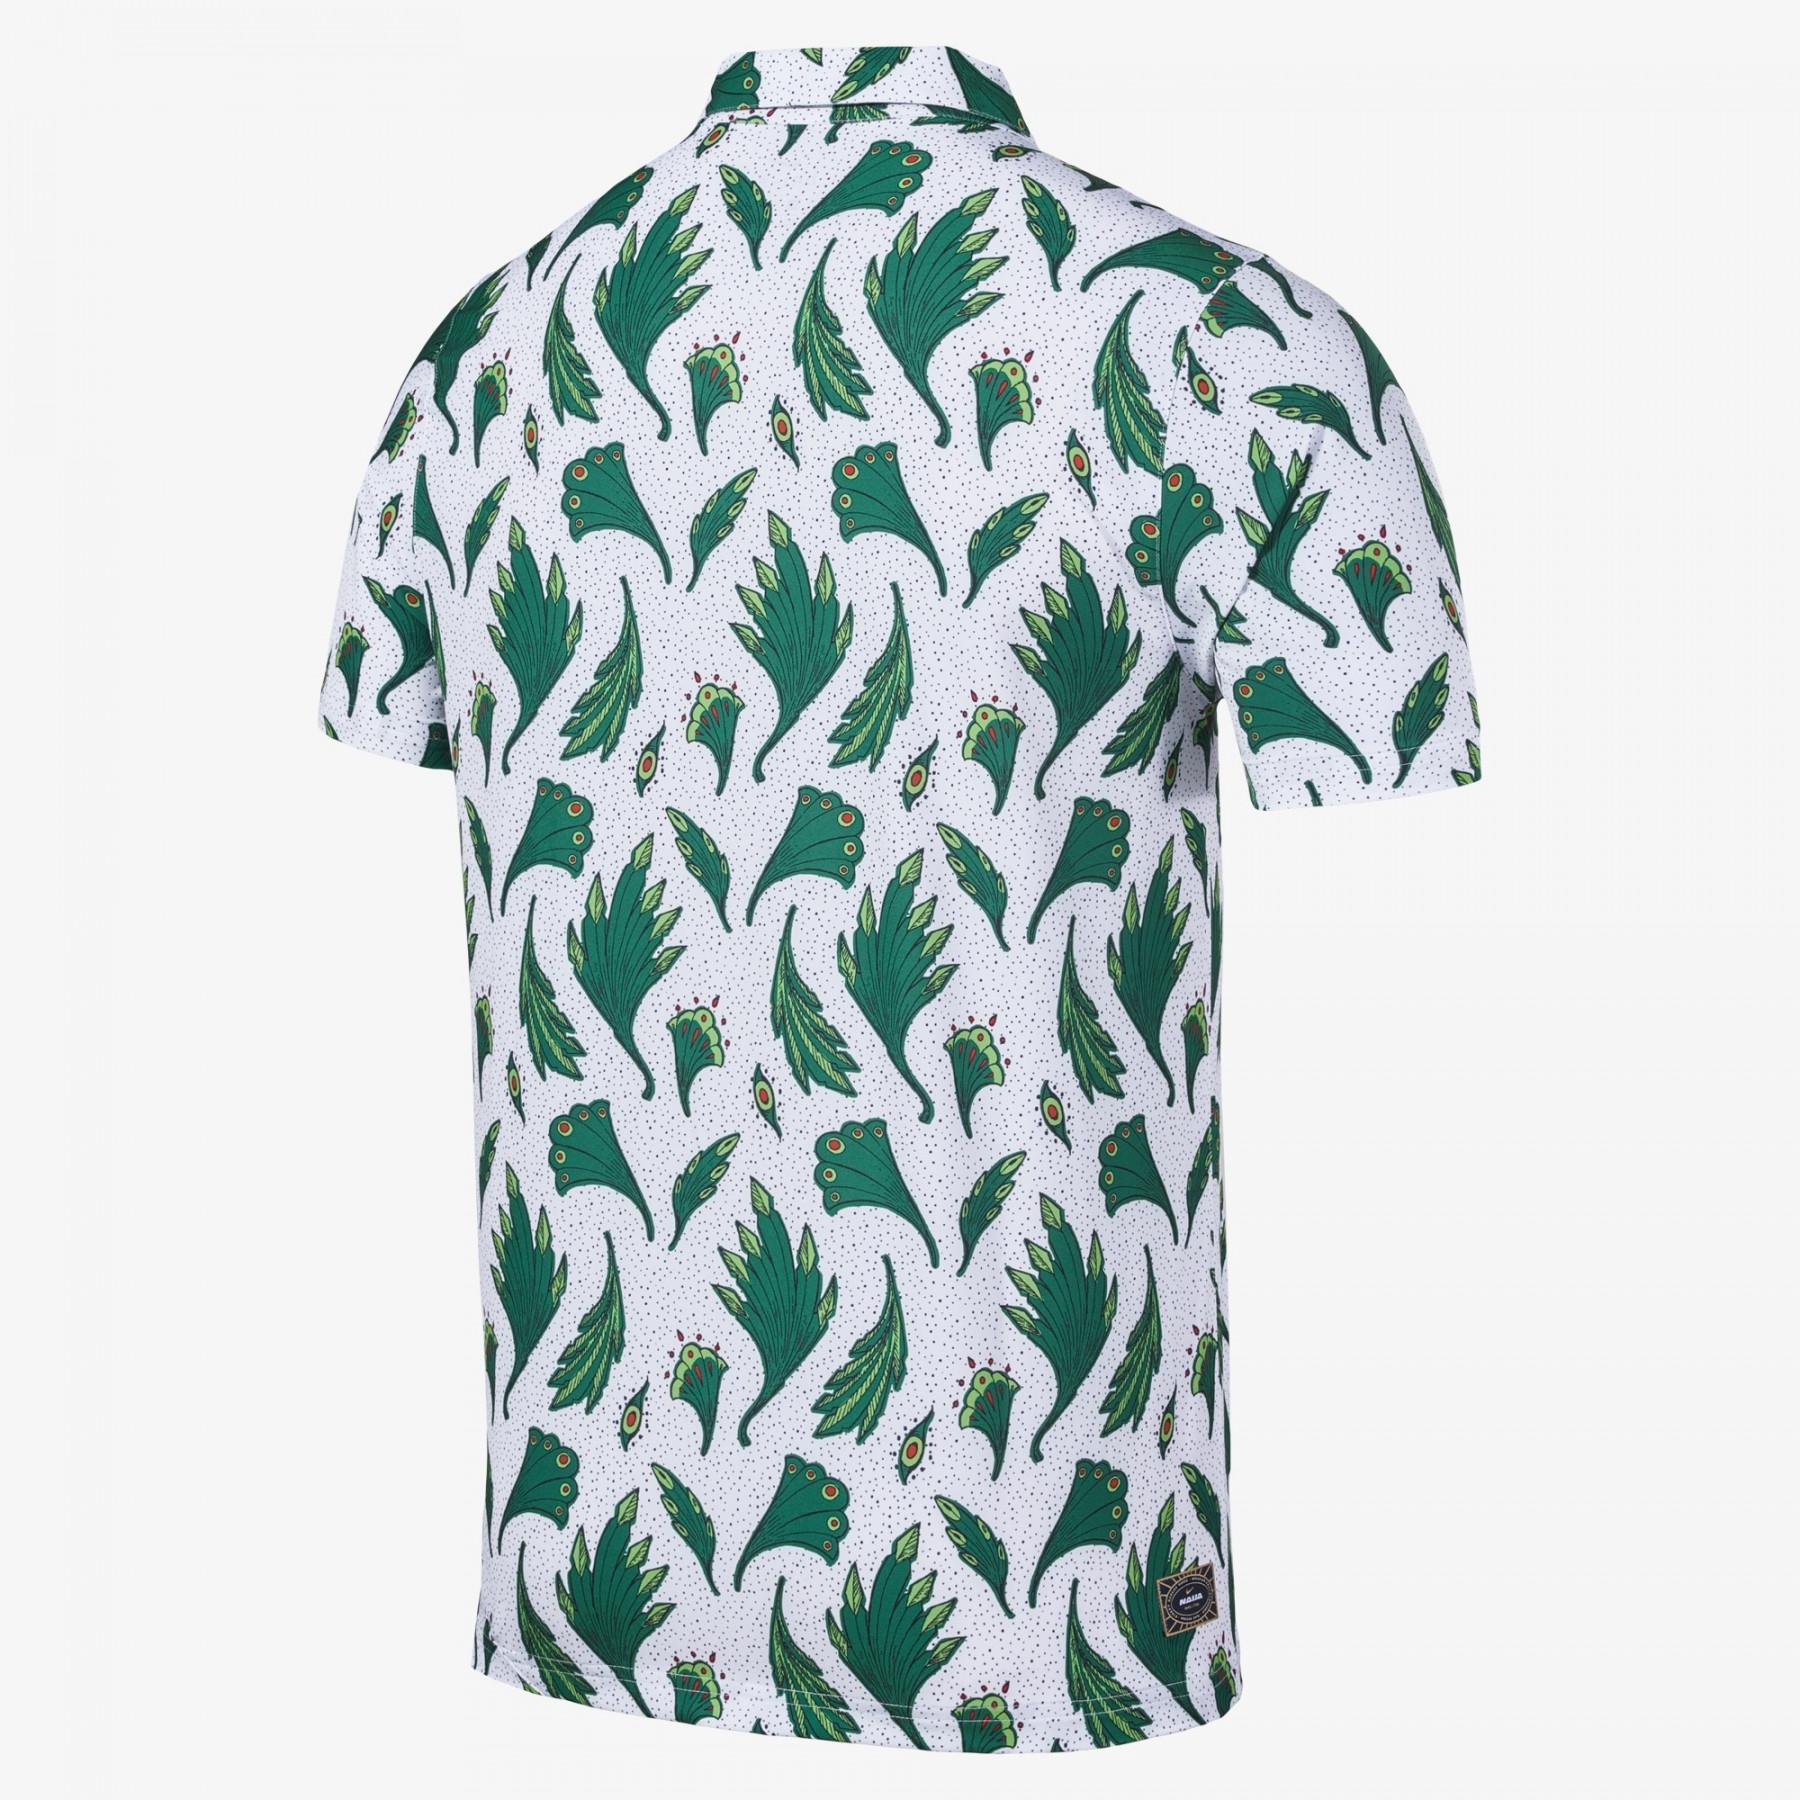 Nigeria skate shirt 2020